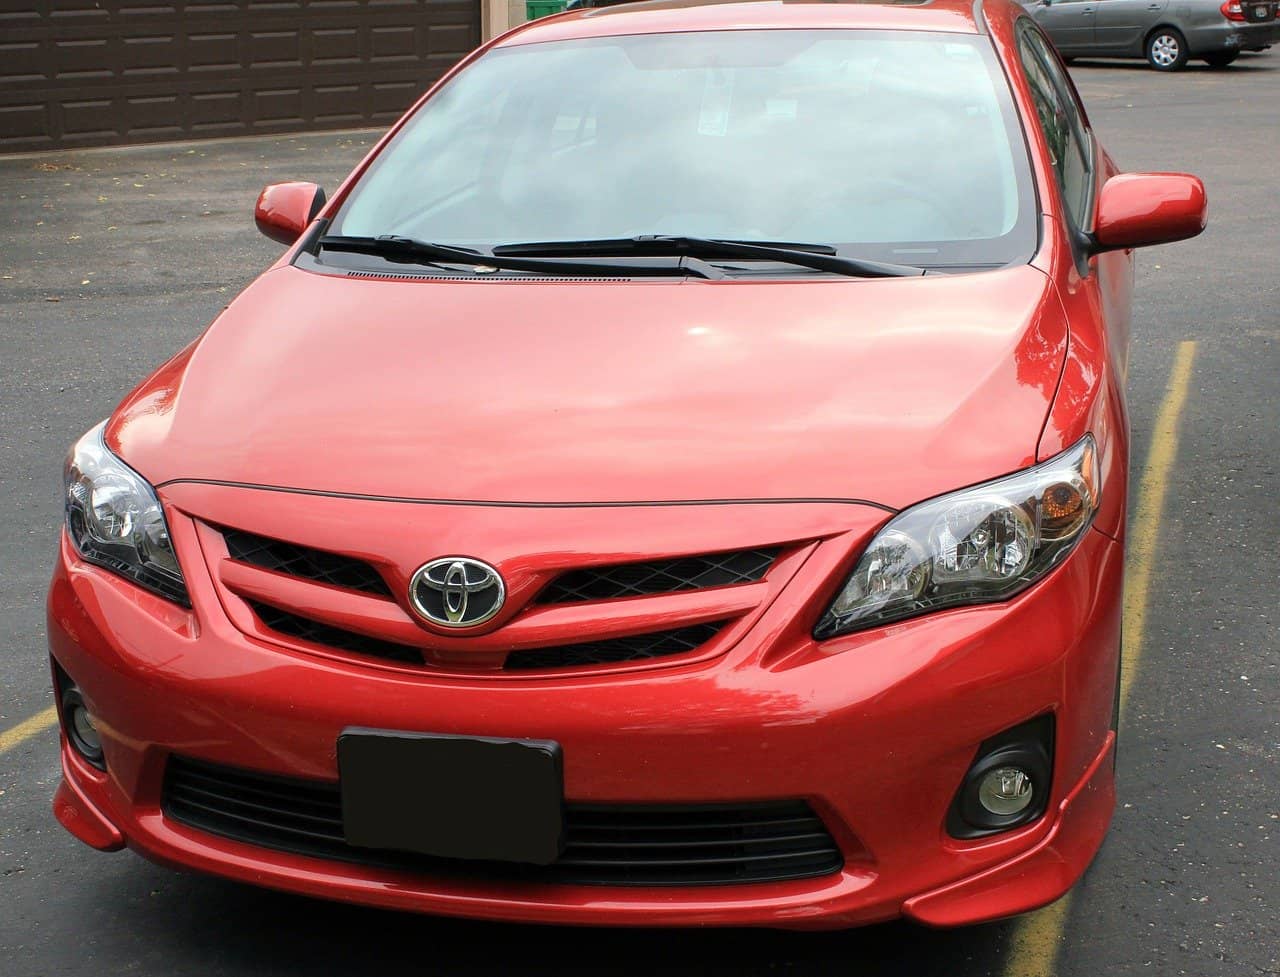 Toyota Corolla in red